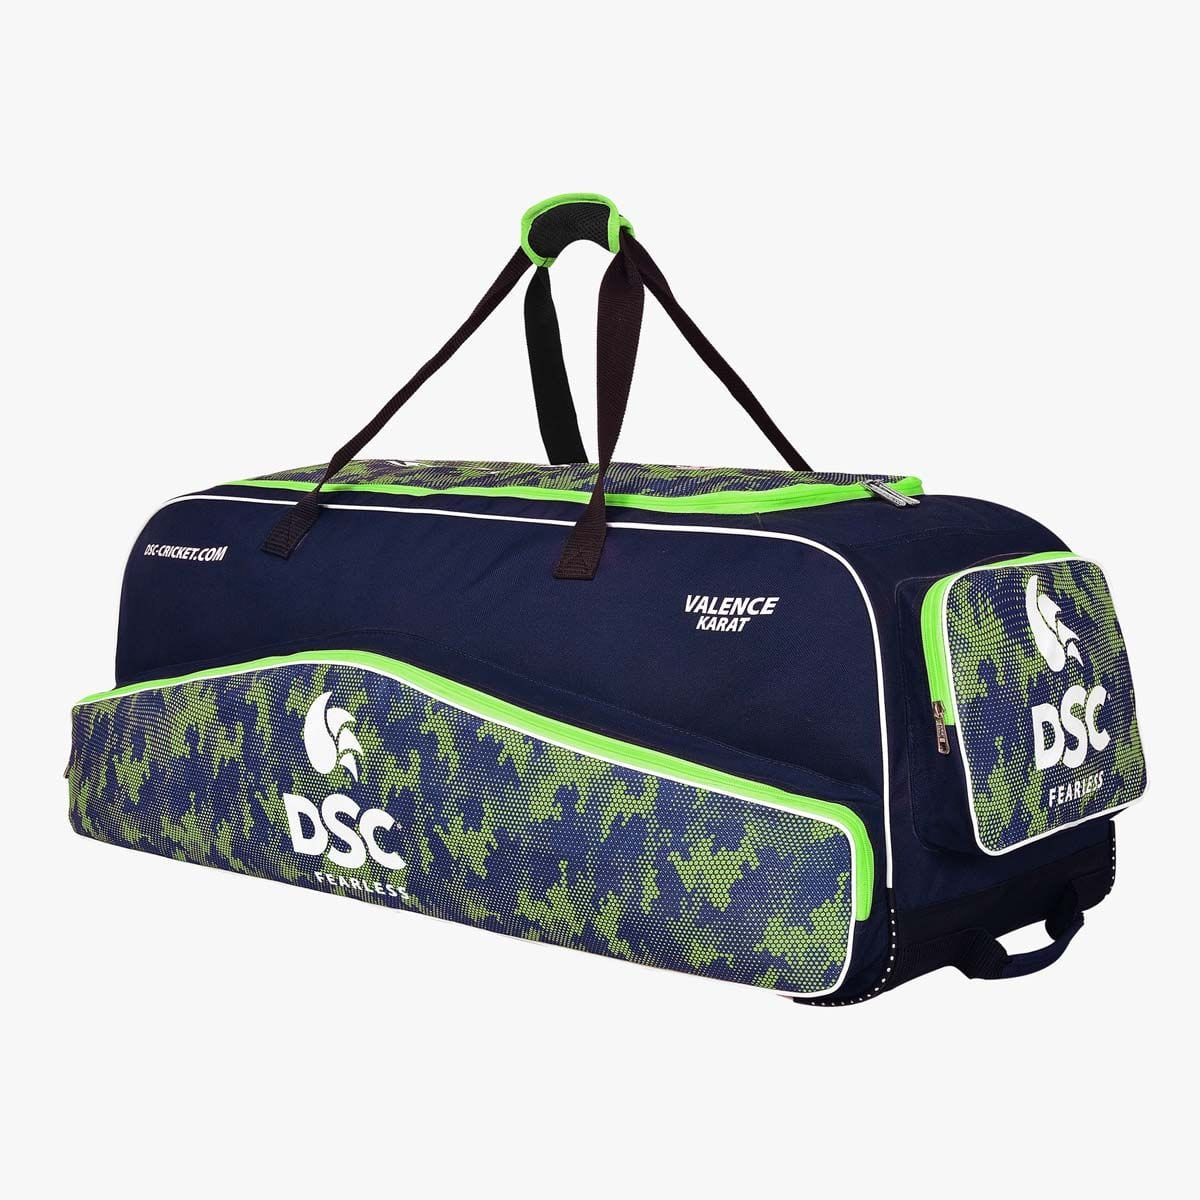 Adidas Cricket Bags DSC Valence Camo Karat Wheels Cricket Bag